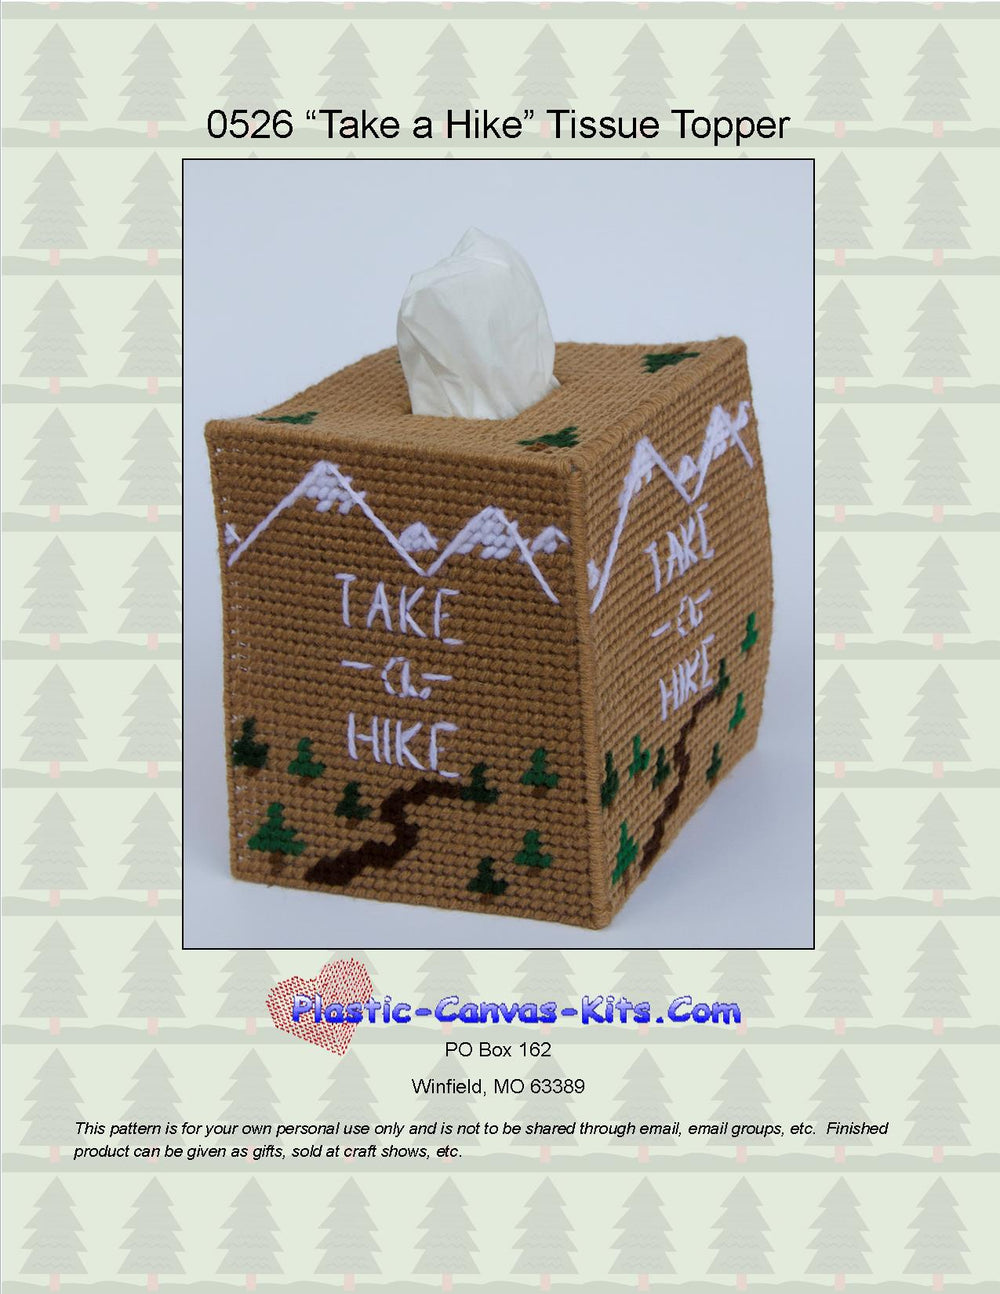 Take a Hike Tissue Topper